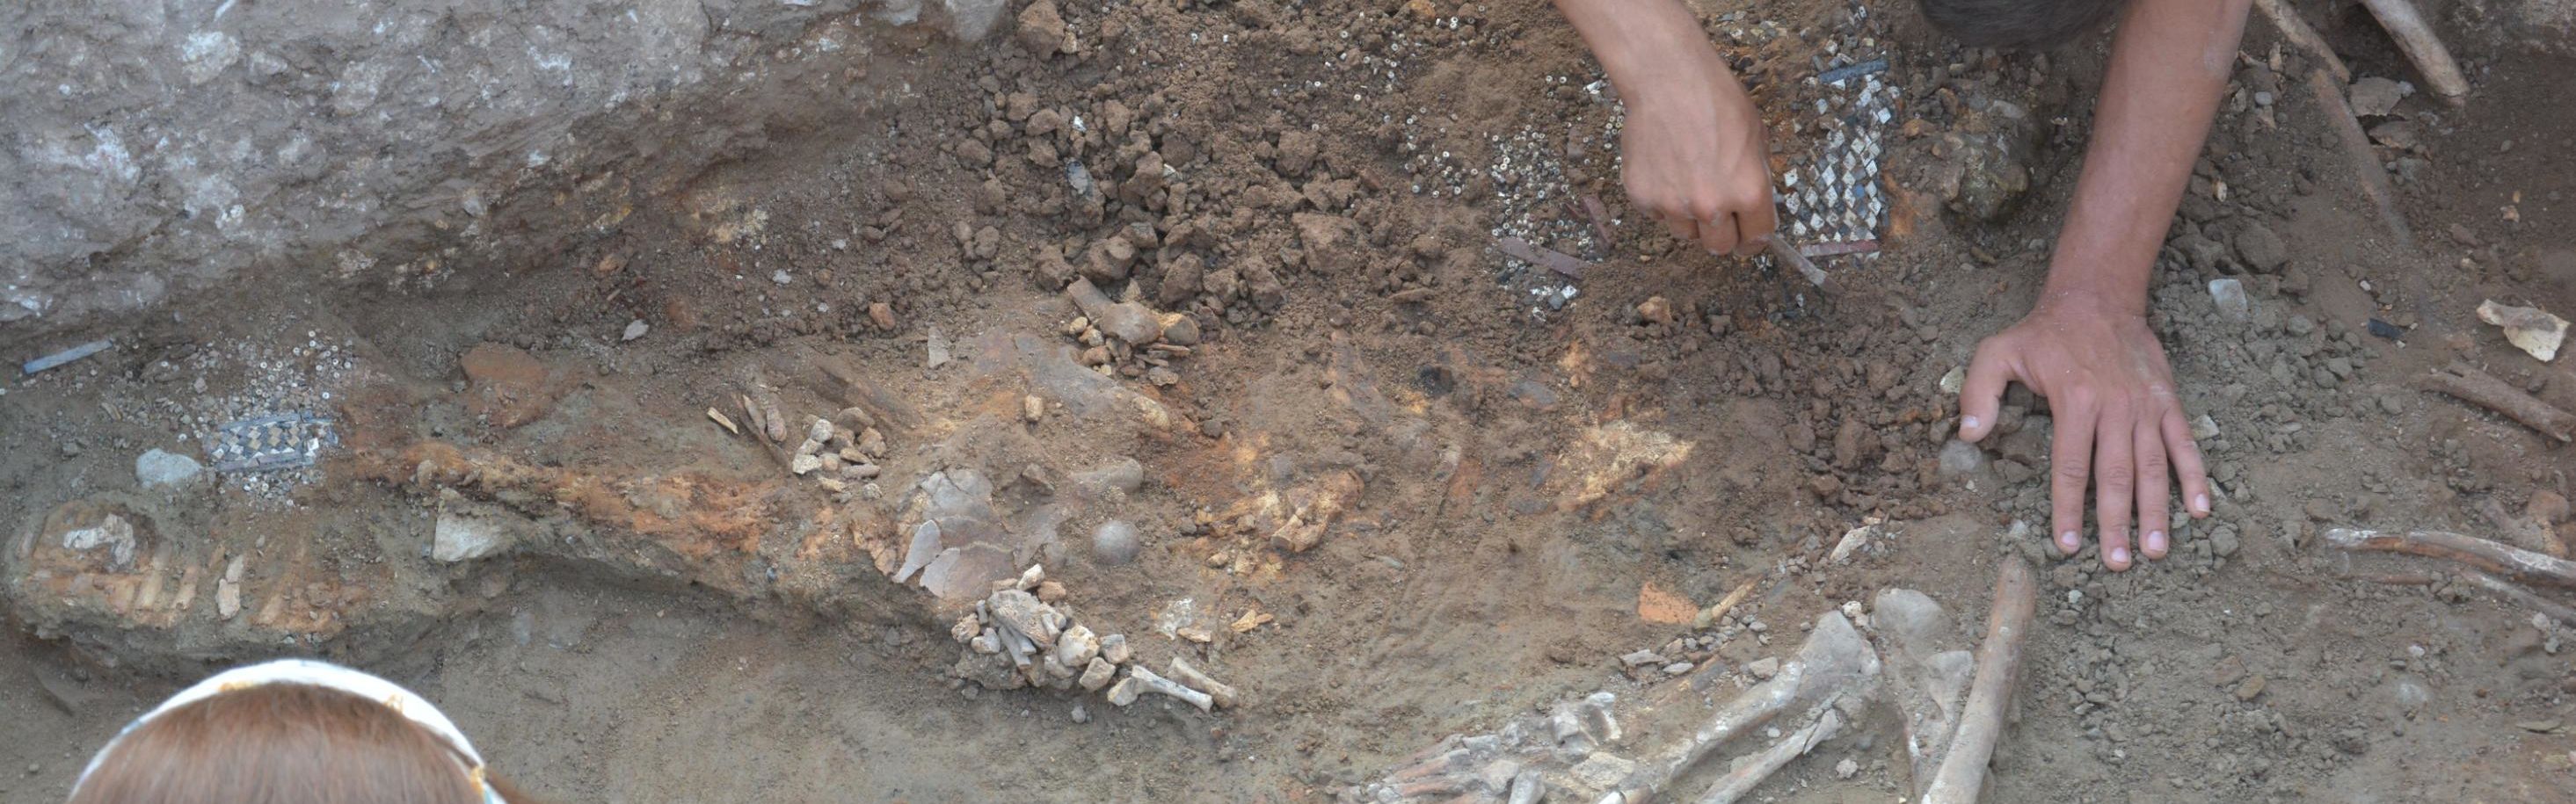 Evidence of child sacrifice found in ancient Turkish cemetery | CNN